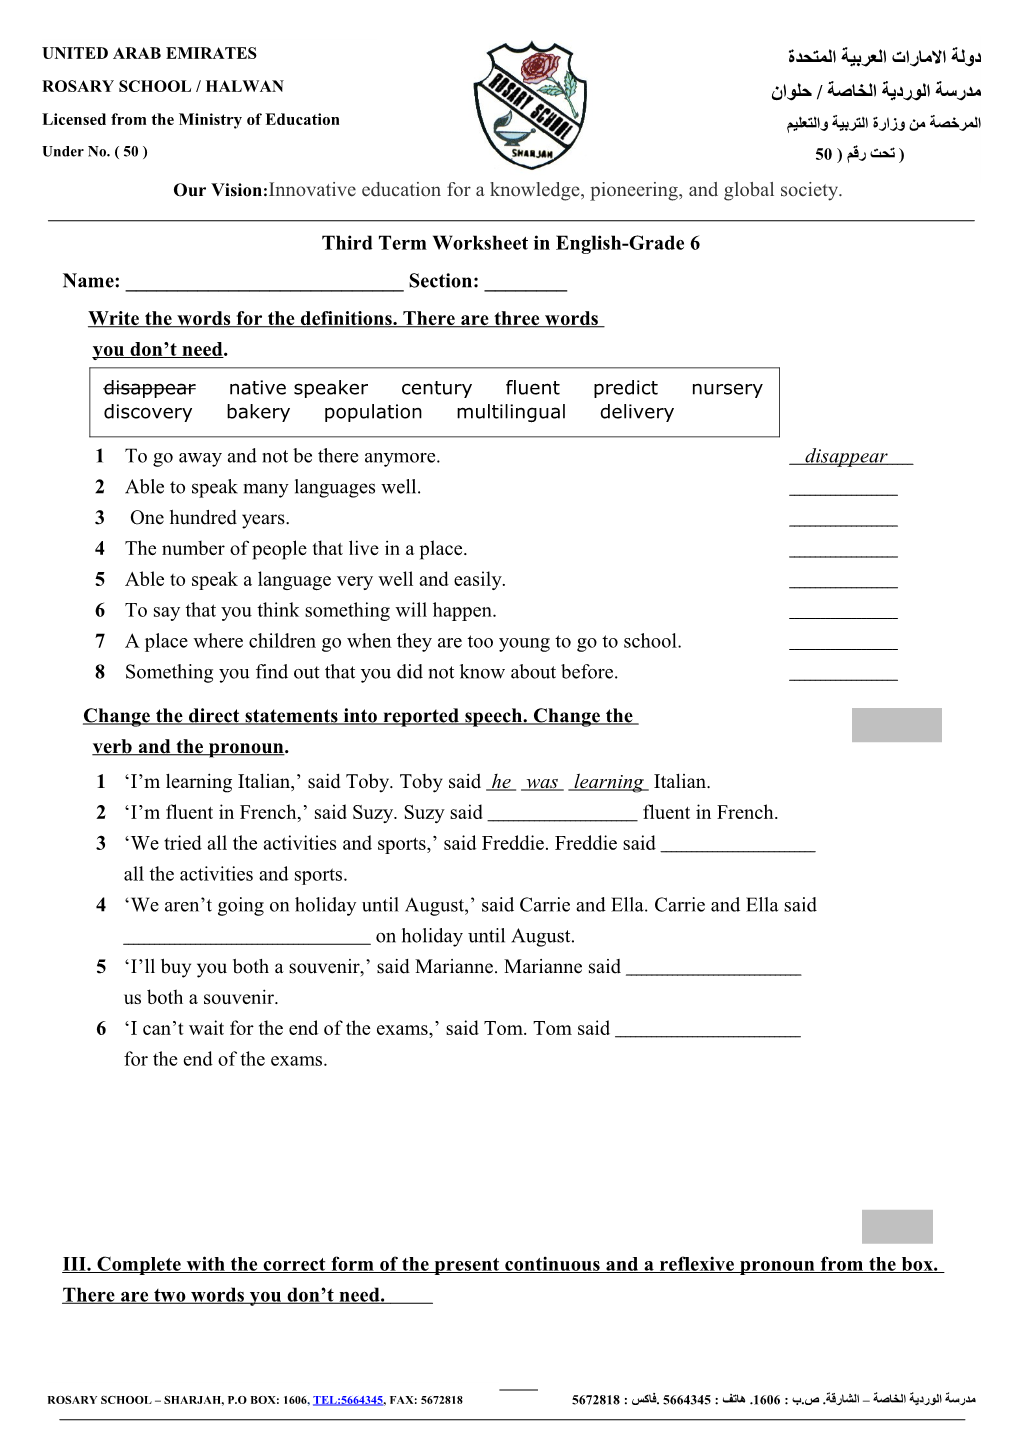 Third Term Worksheet in English-Grade 6